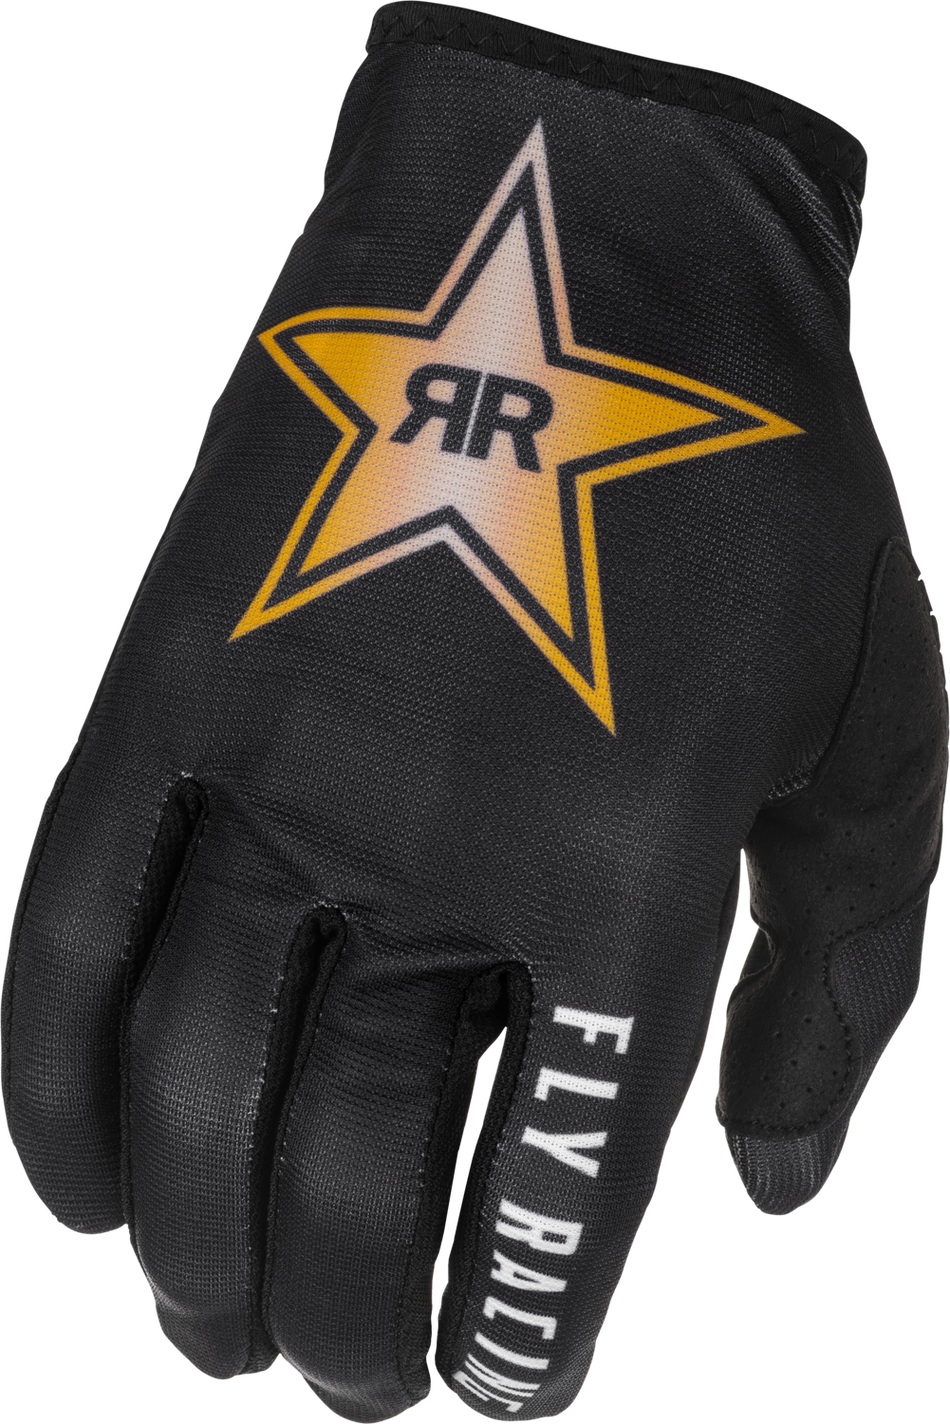 FLY RACING Lite Rockstar Gloves Black/Gold Md 374-013M